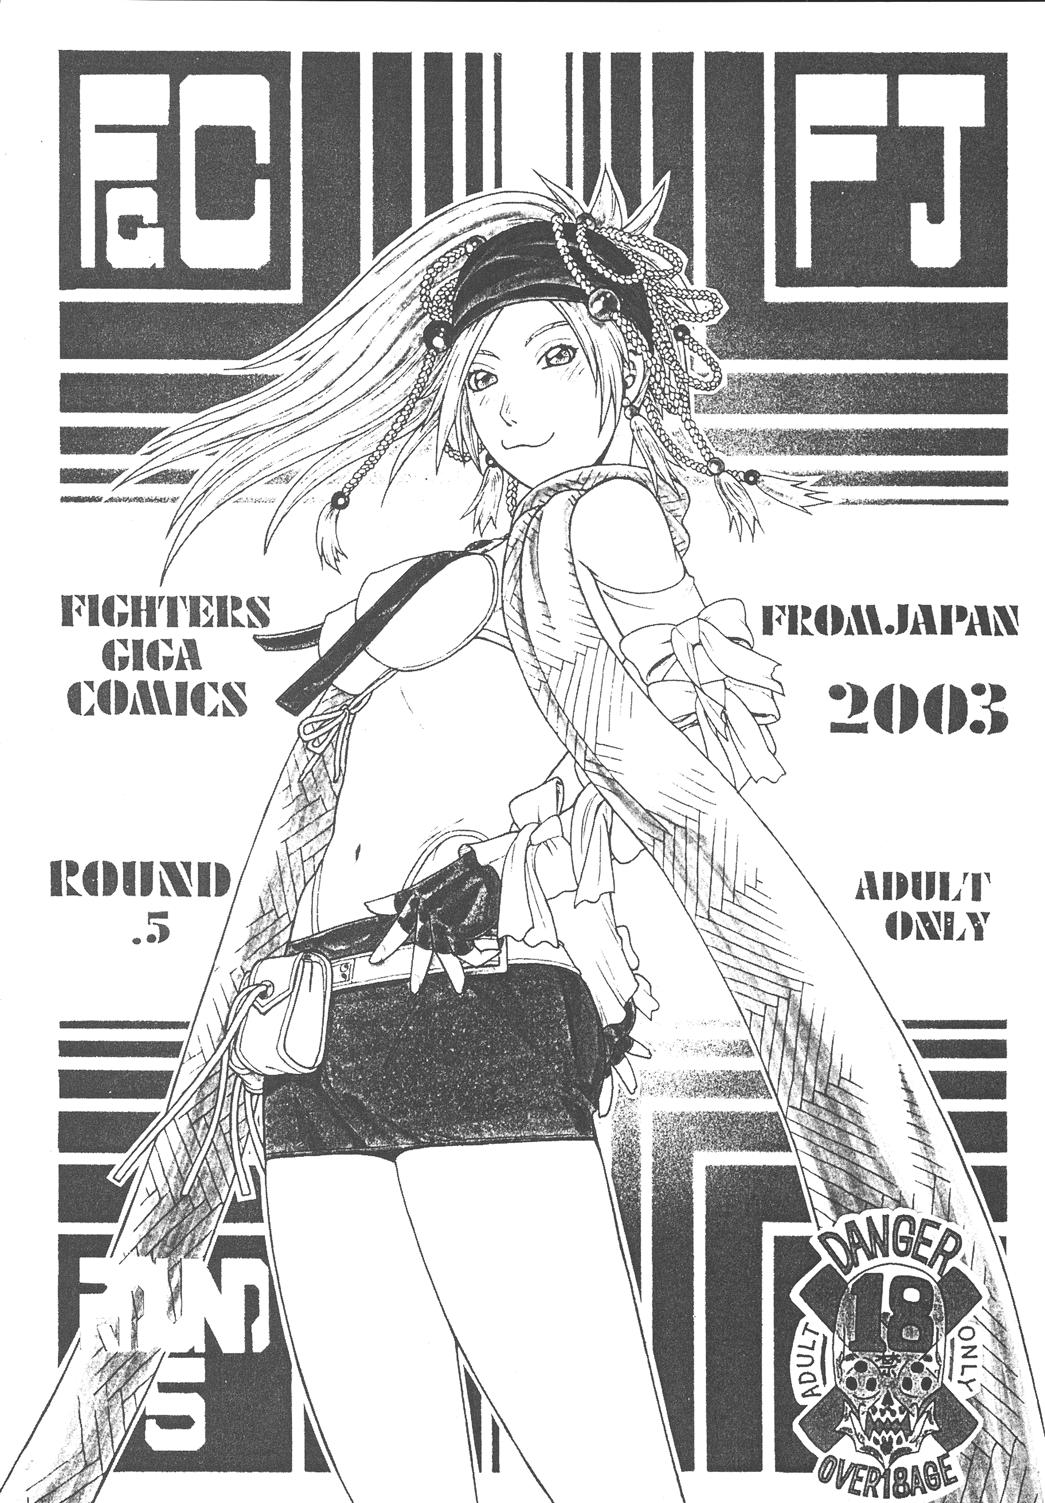 Fighters Giga Comics Round 5 1